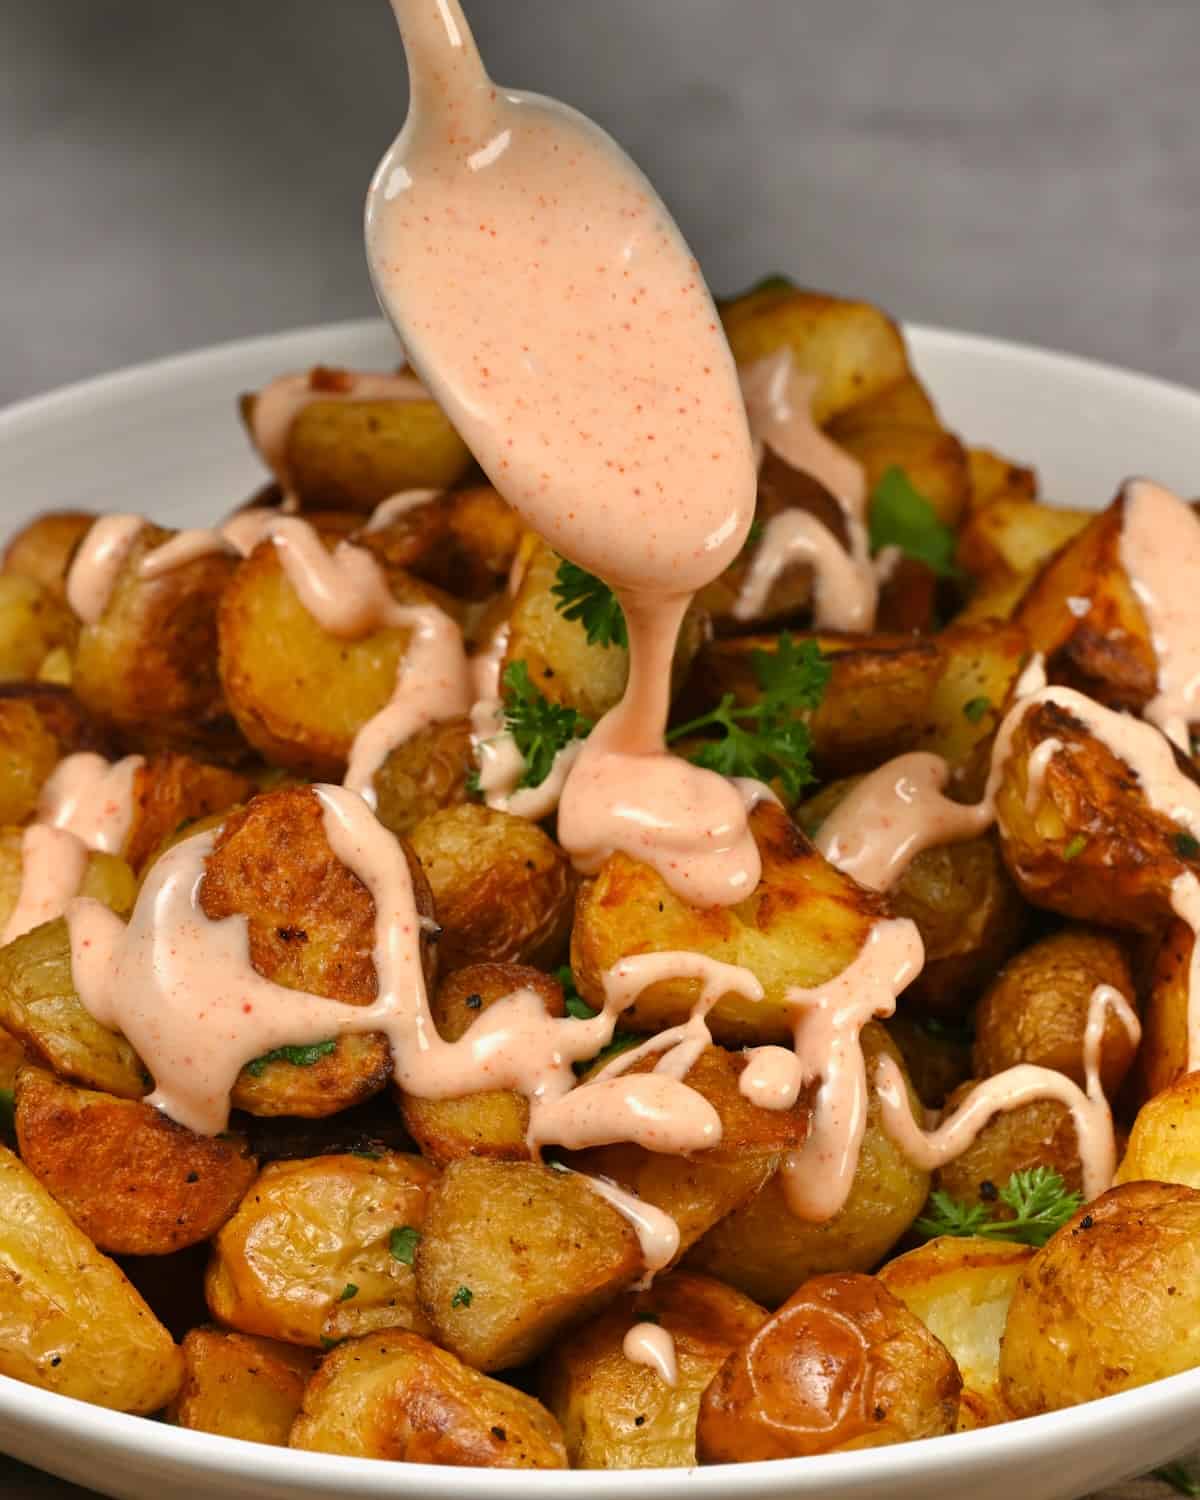 Serving potatoes with Yum Yum sauce